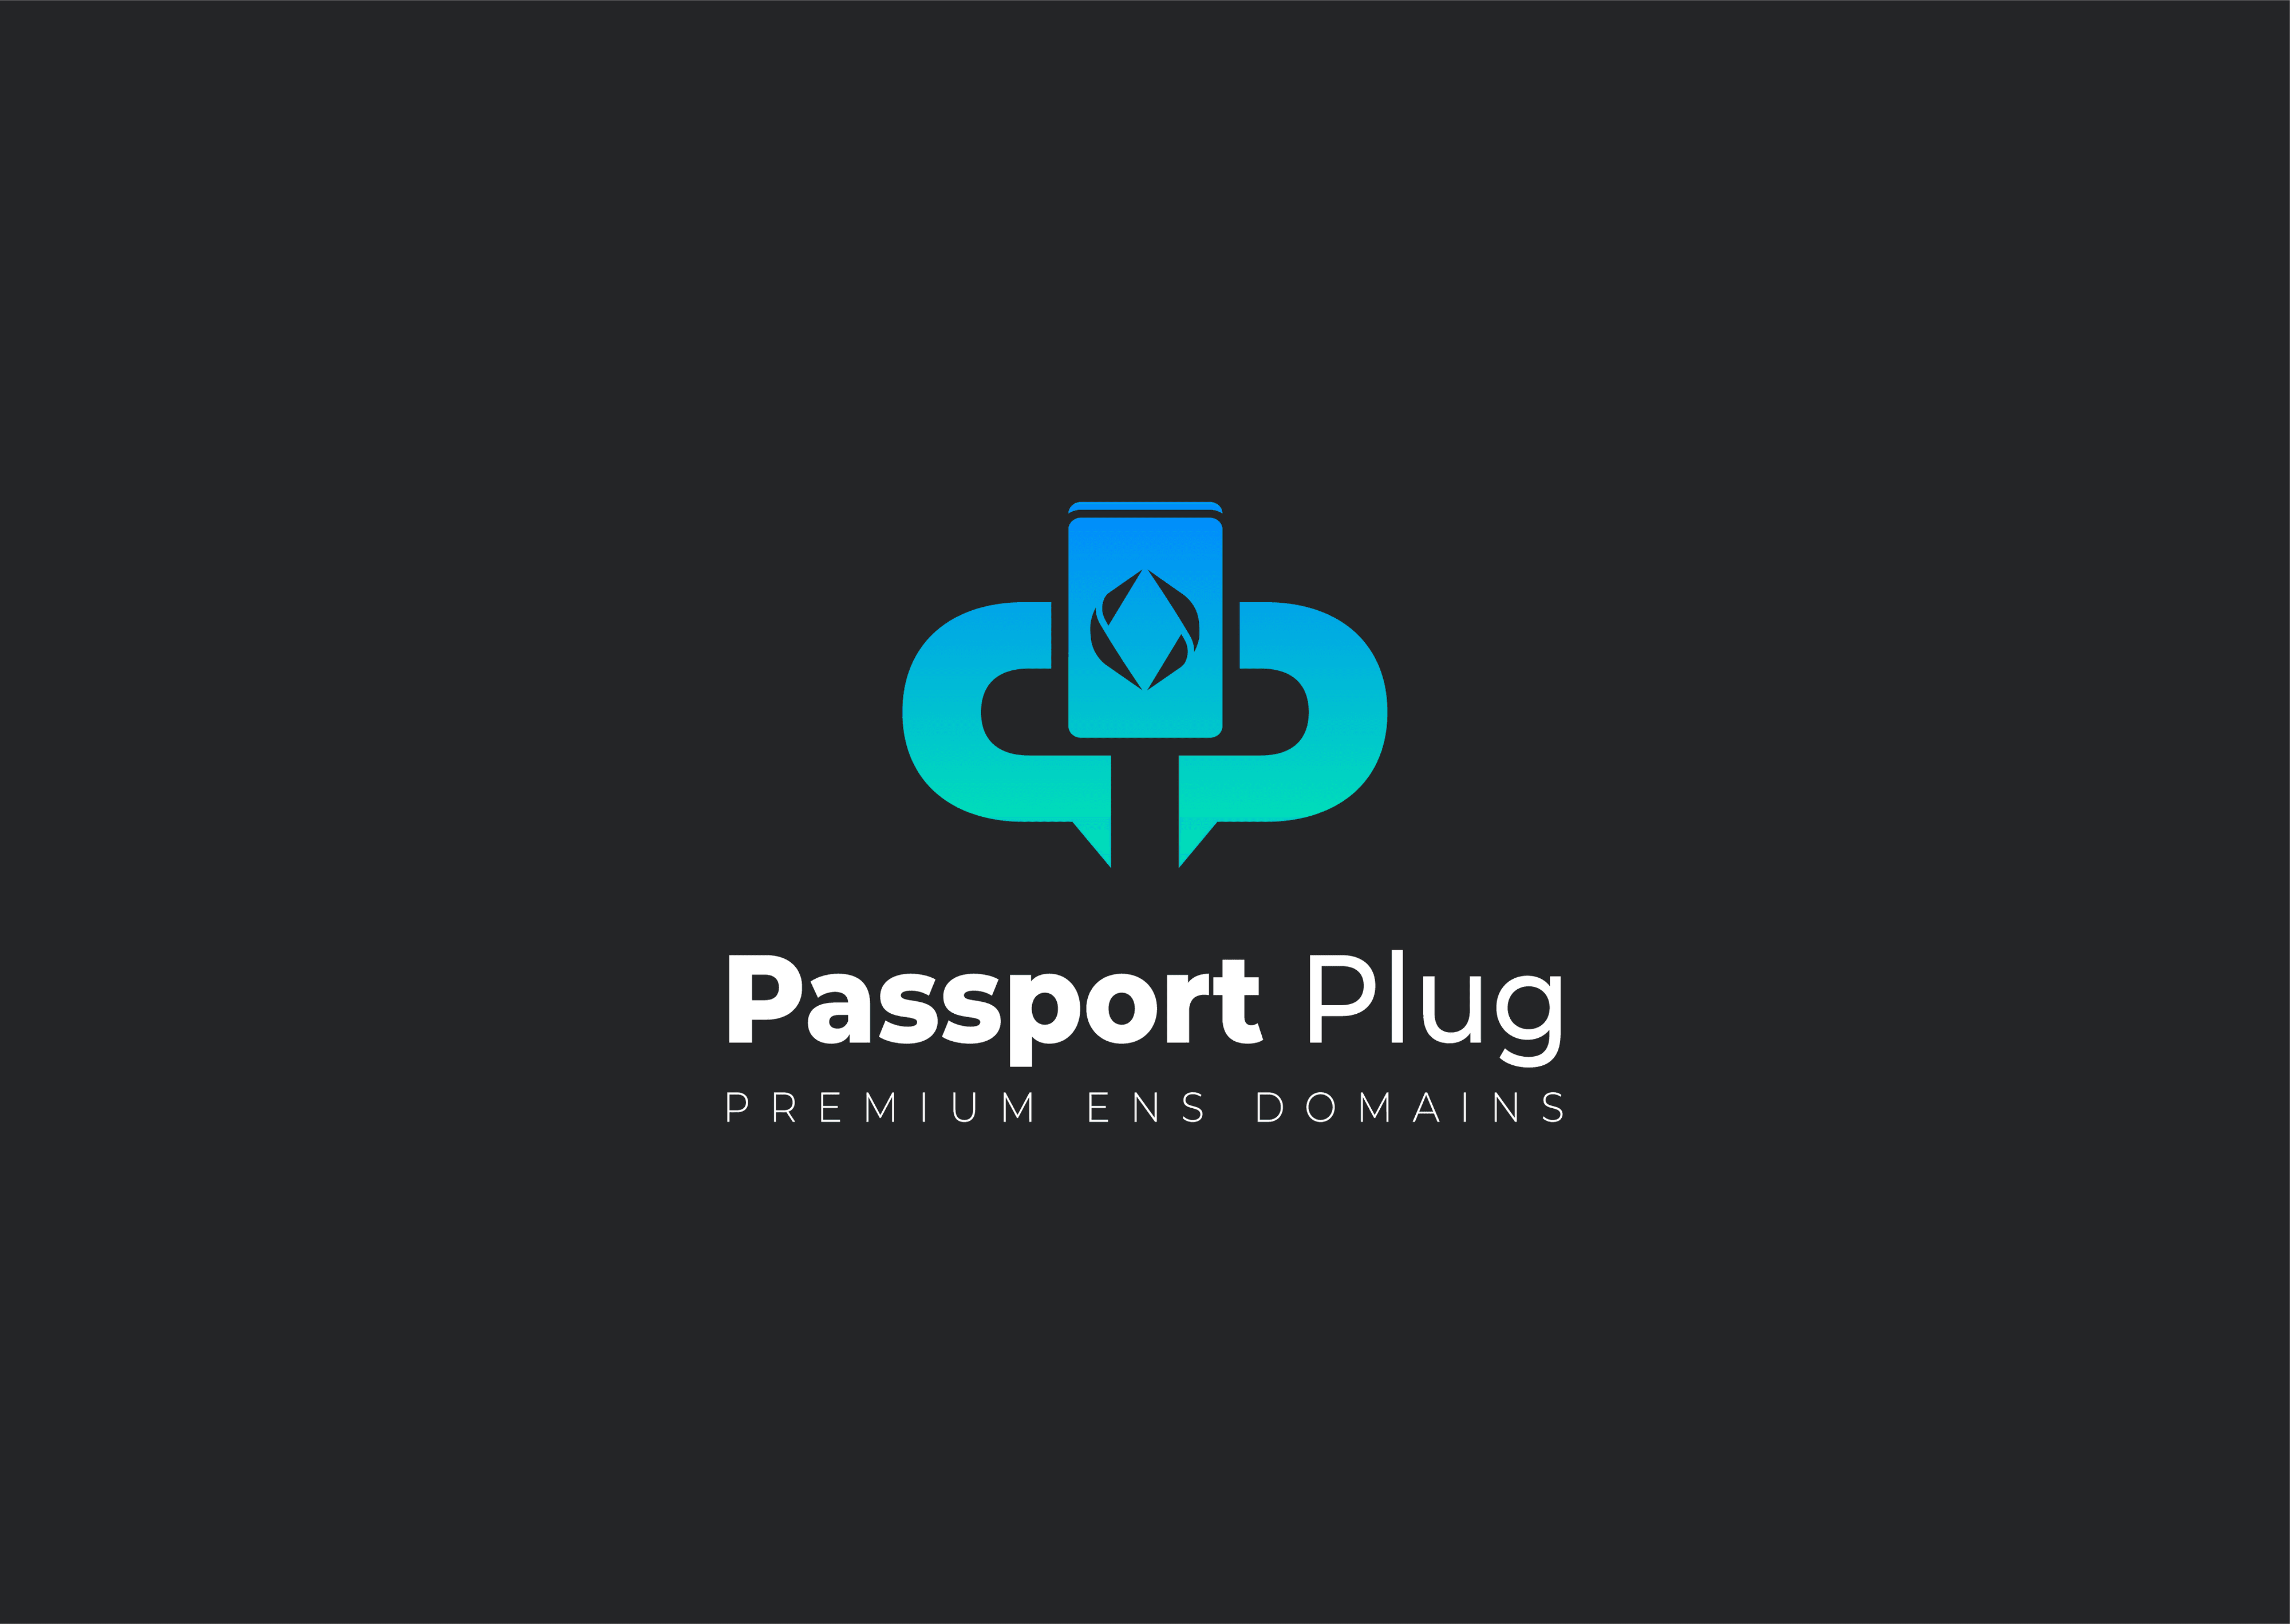 PassportPlug